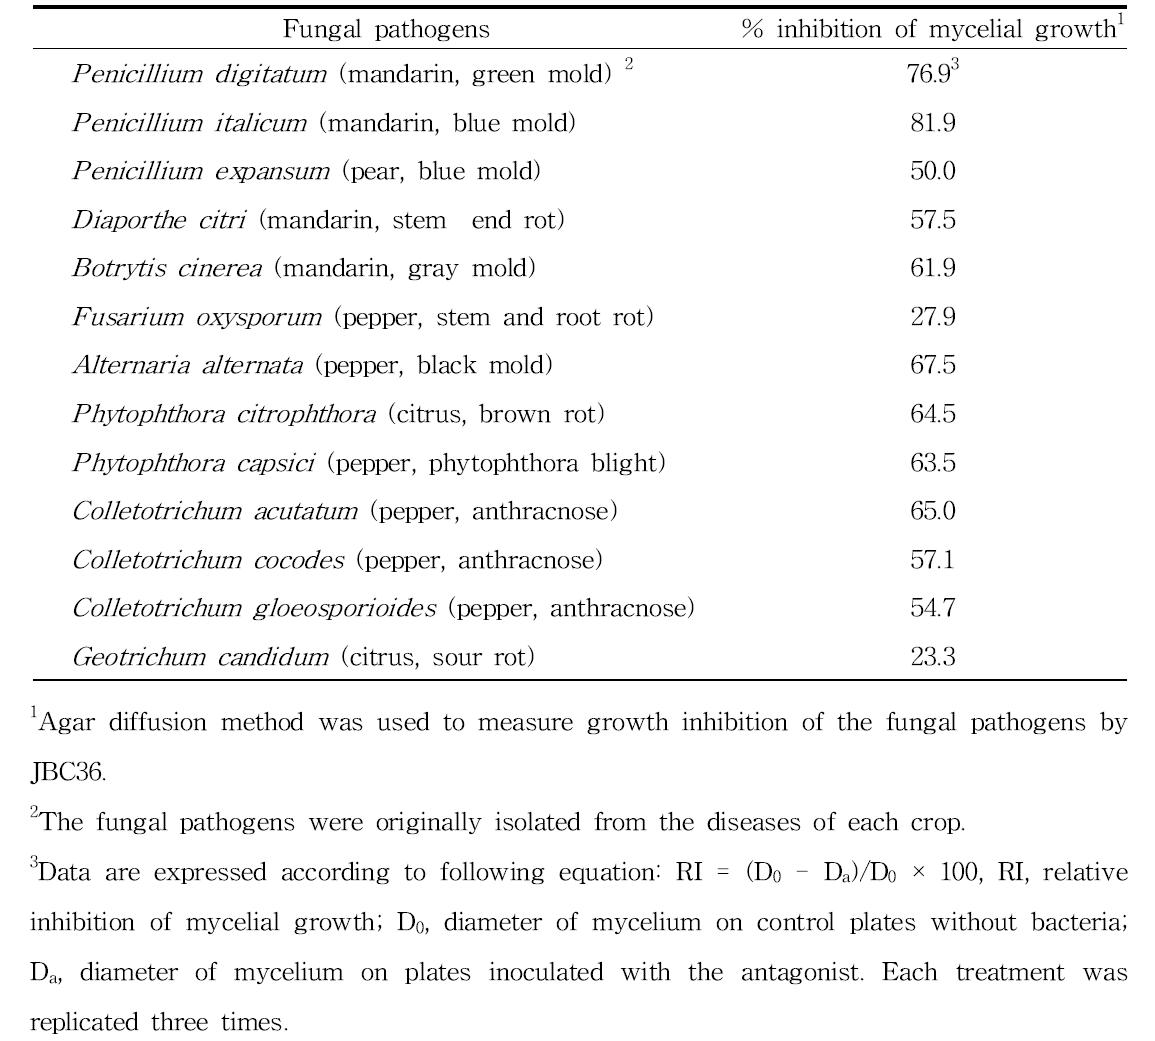 Percent inhibition of mycelial growth of fungal pathogens by B. amyloliquefaciens JBC36.